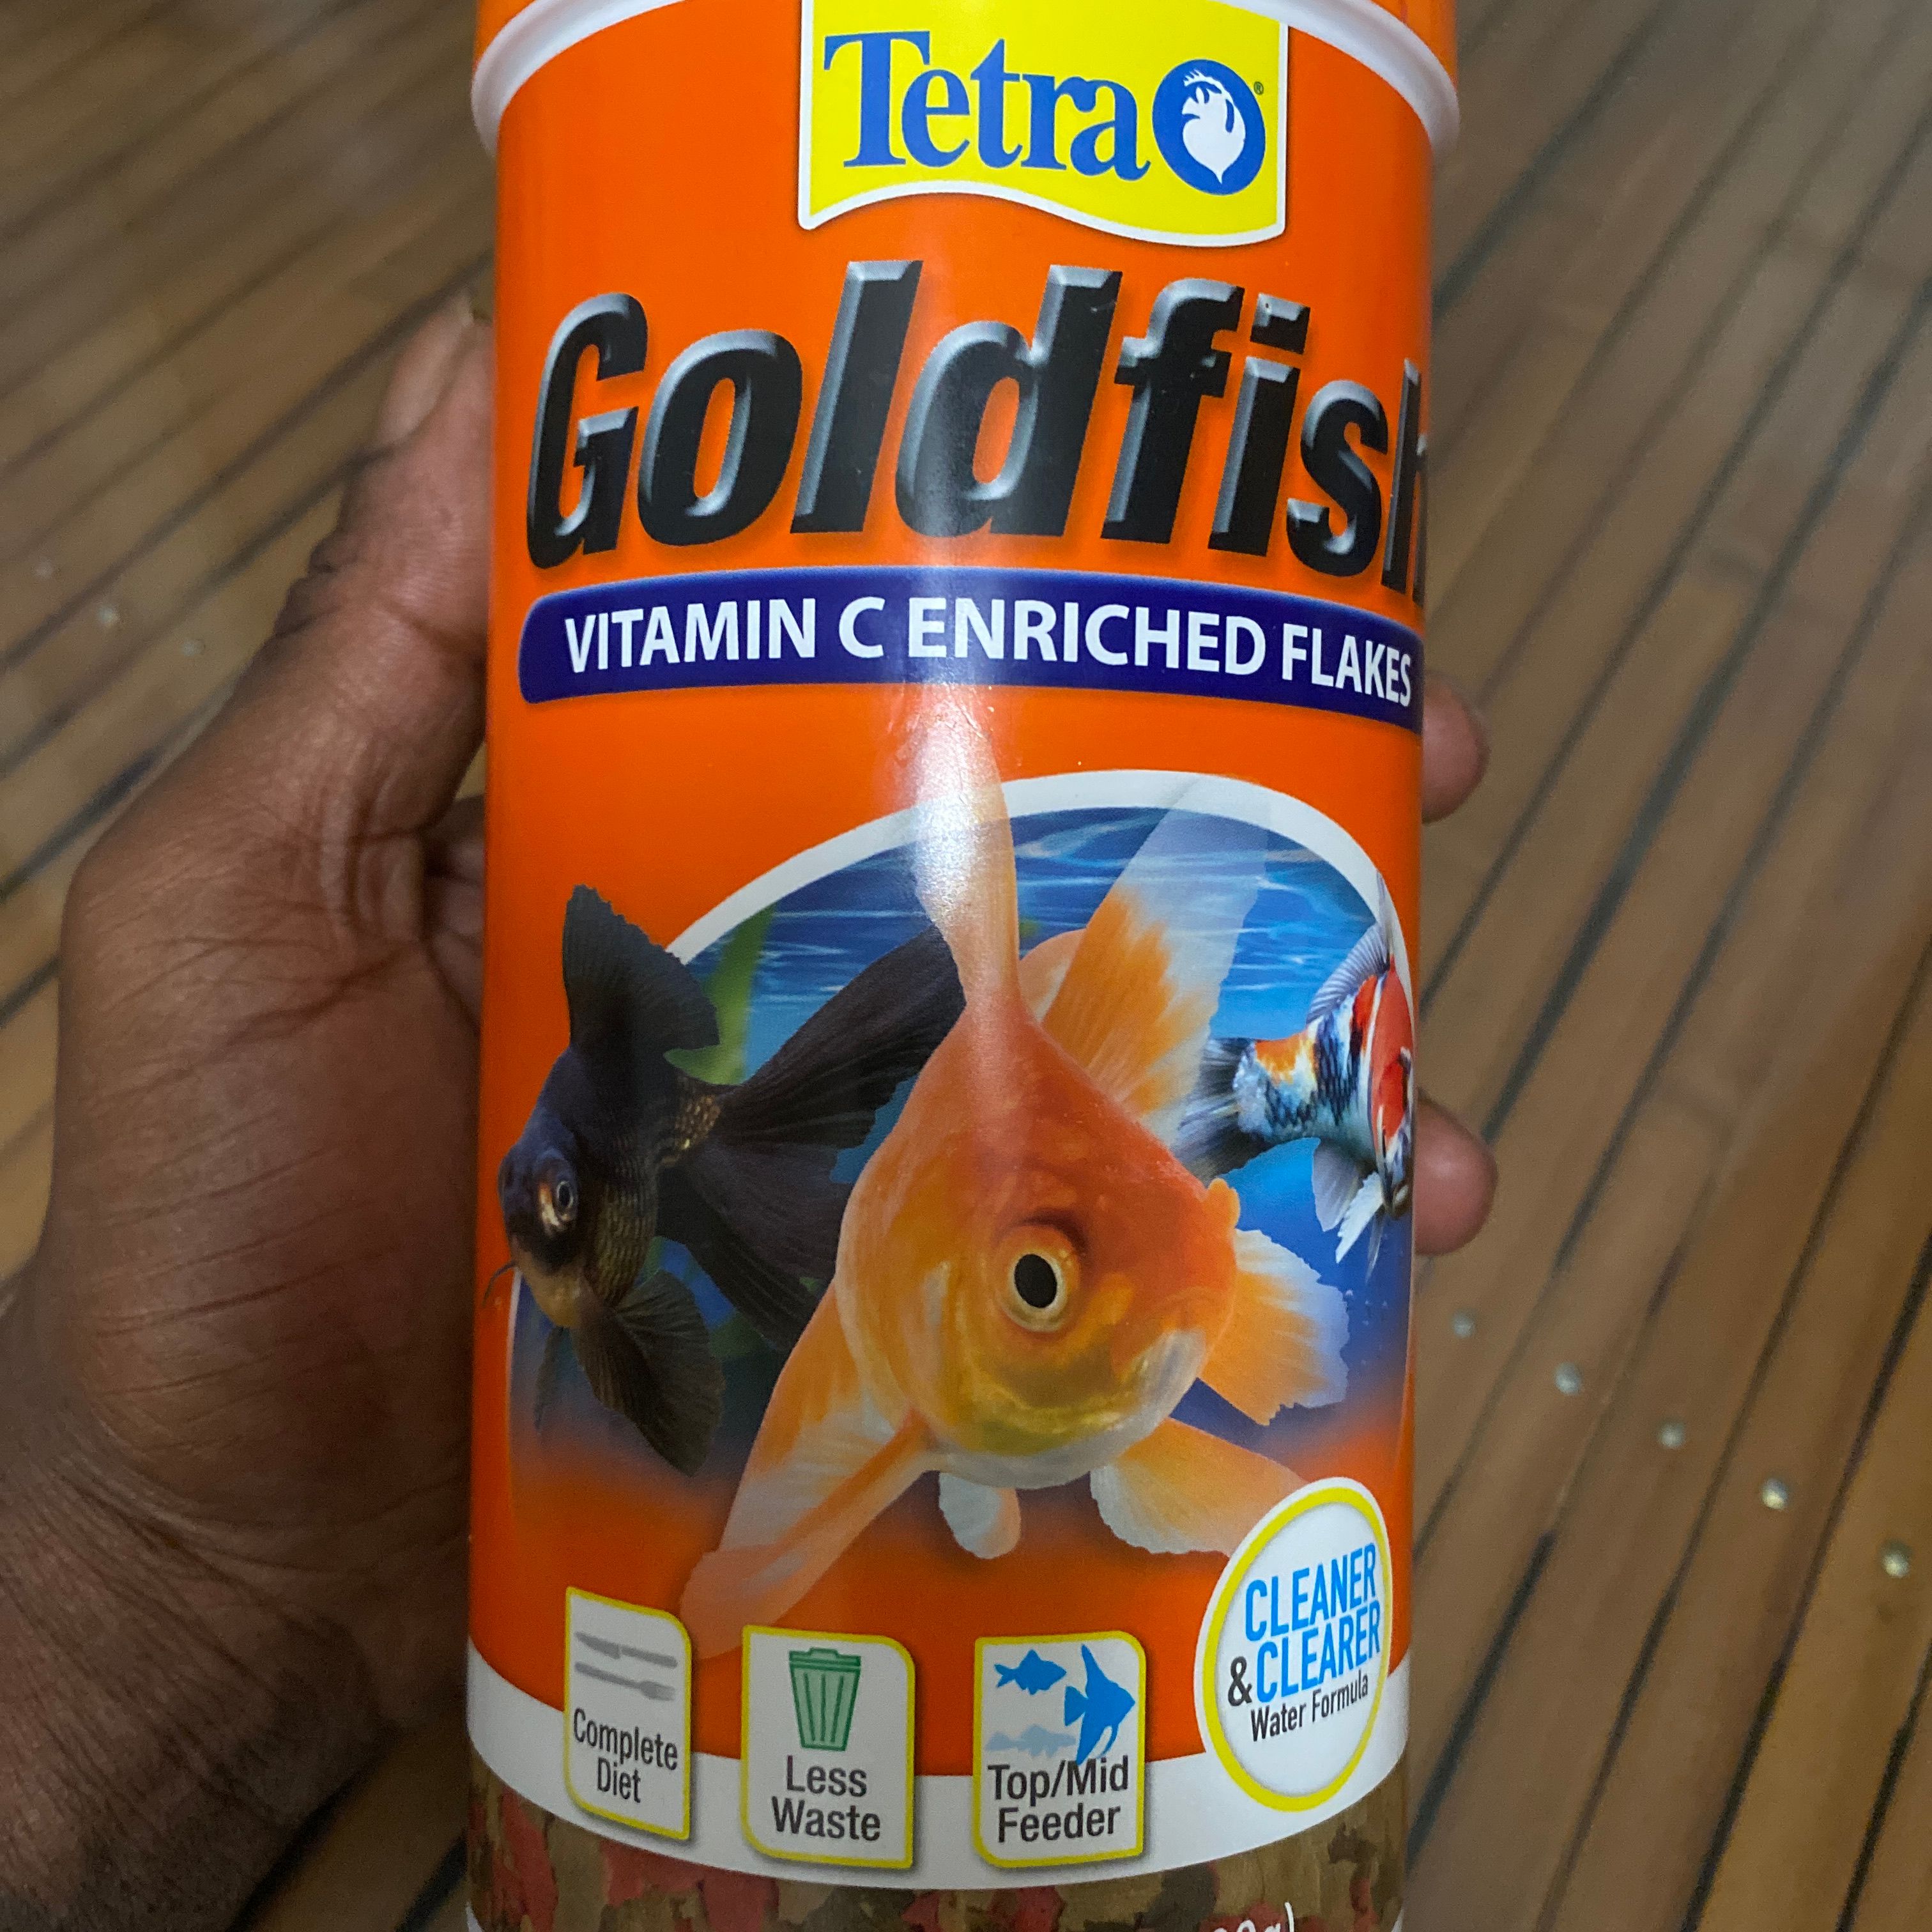 Goldfish vitamin C enriched flakes